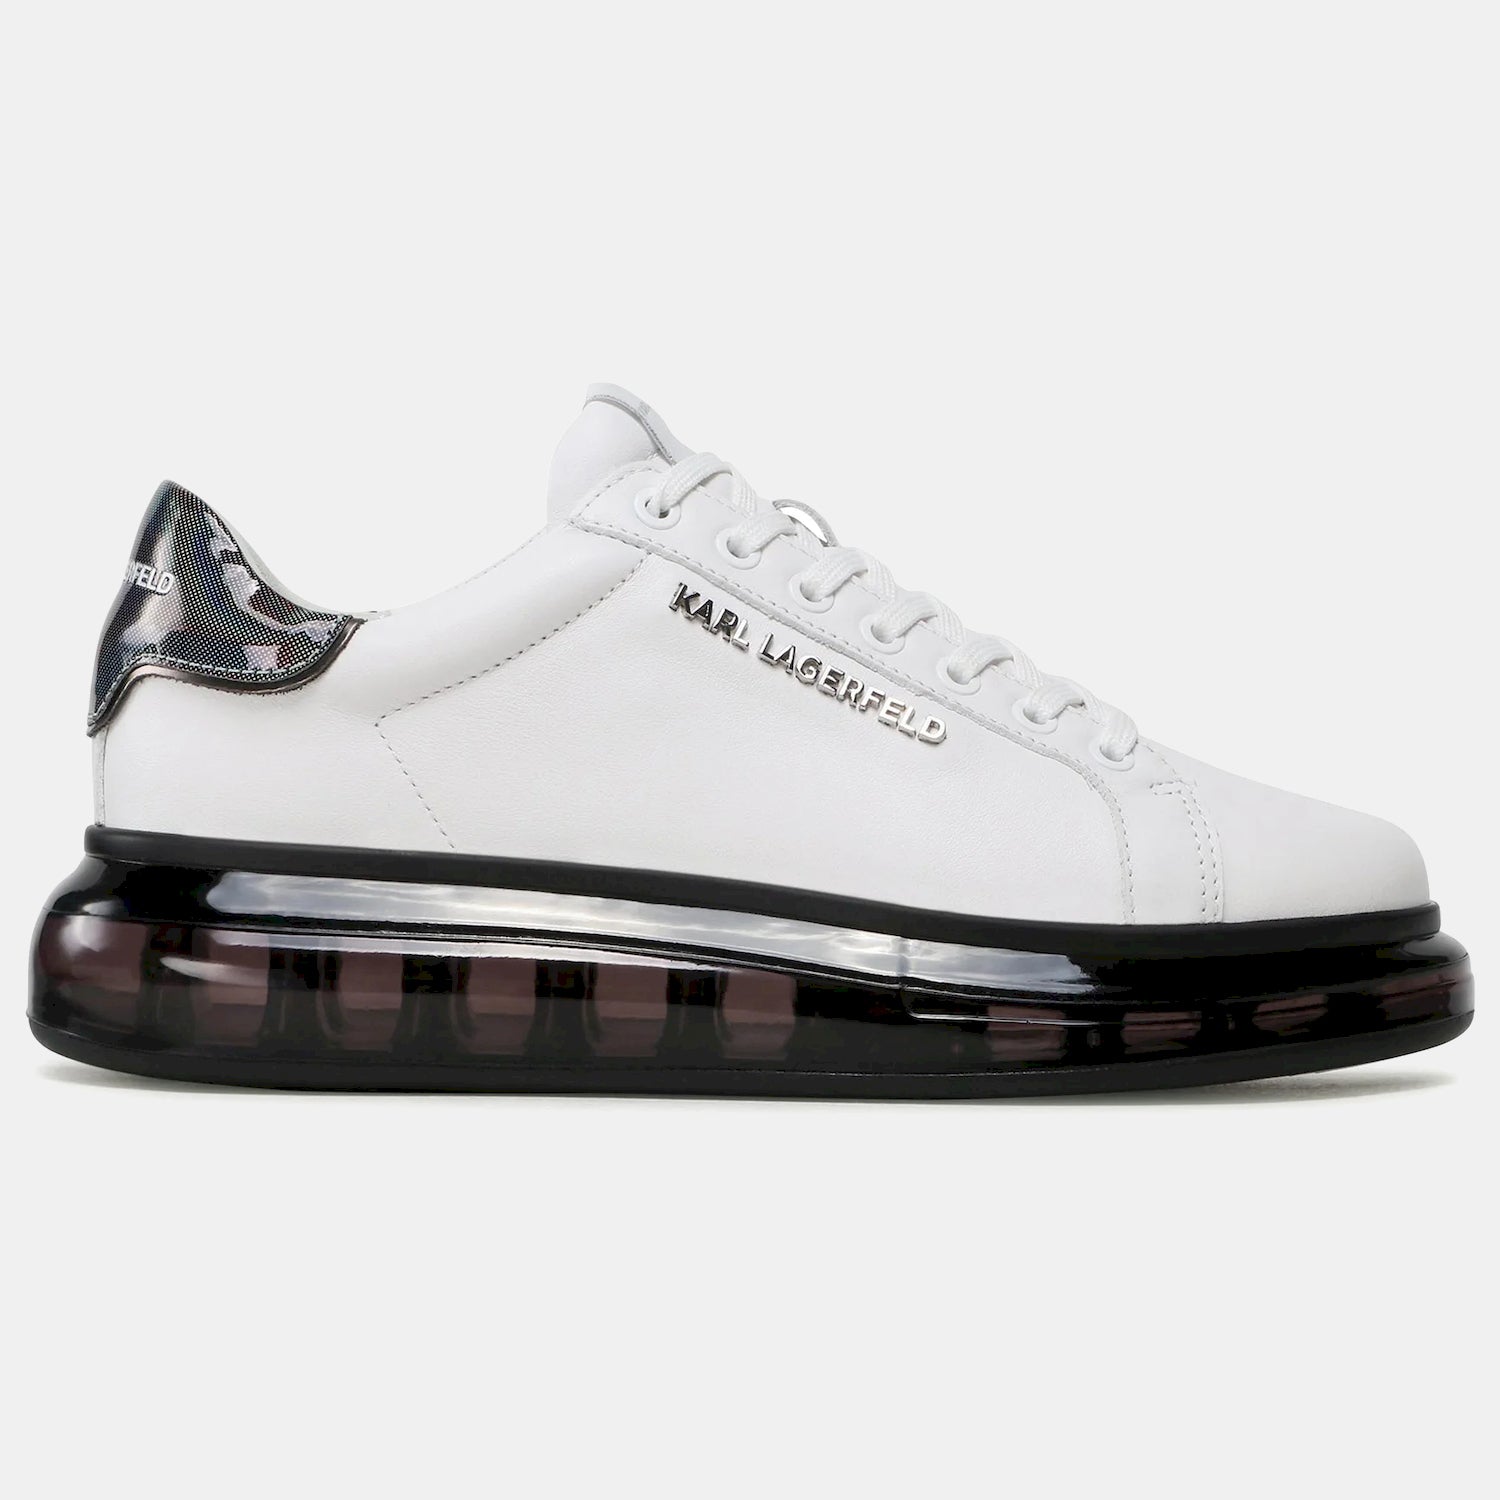 Karl Lagerfeld Sapatilhas Sneakers Shoes Kl52625 Whi Black Branco Preto_shot1